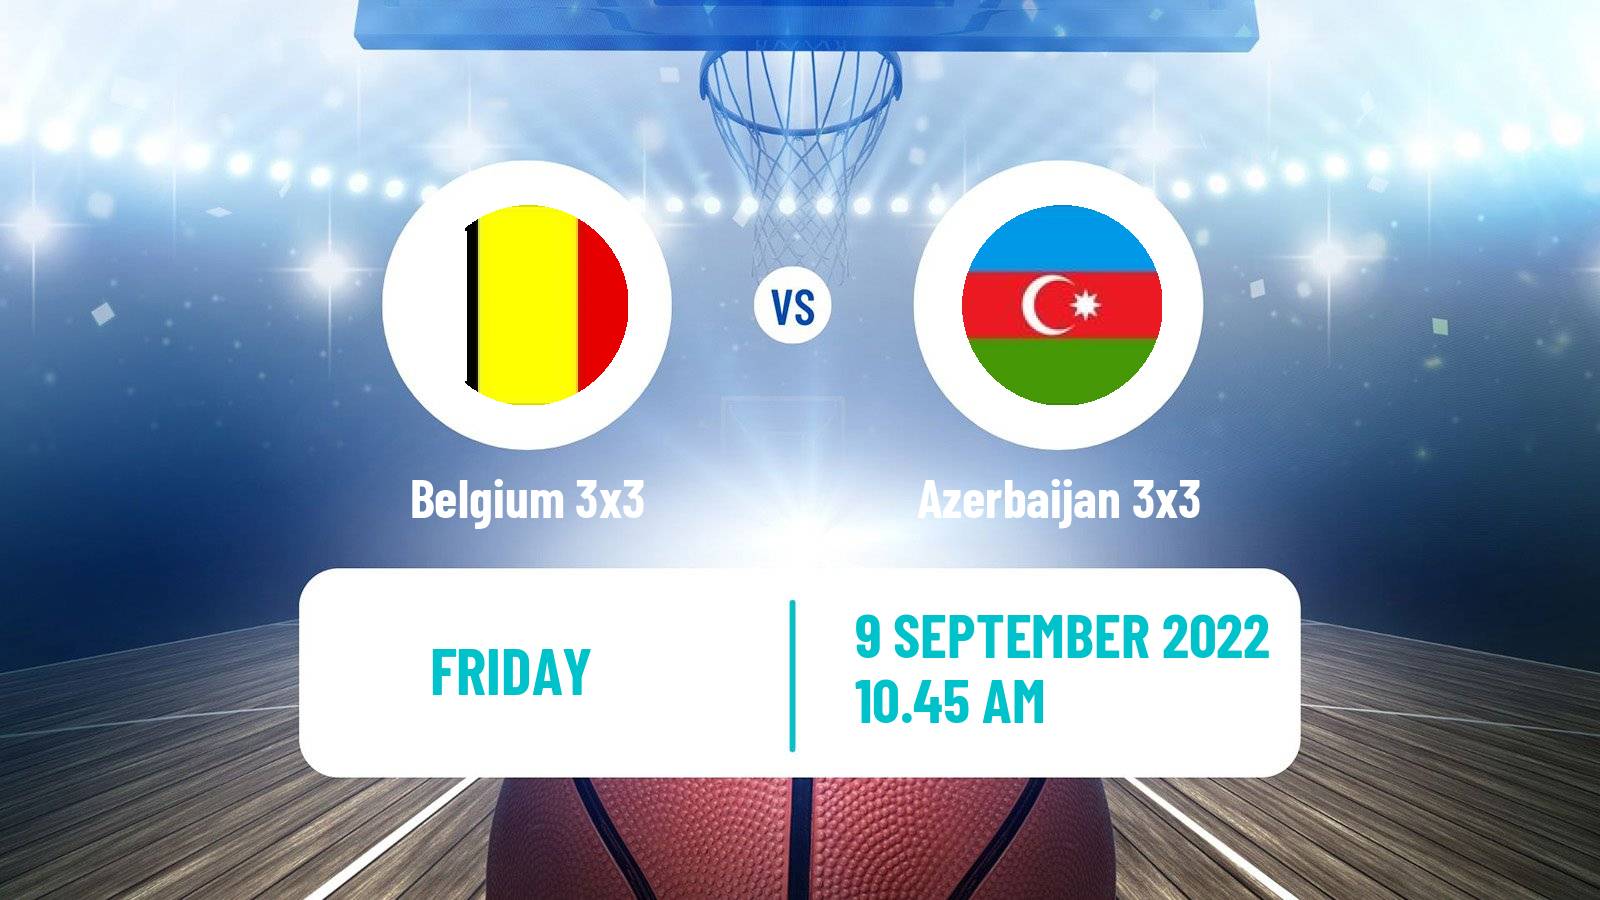 Basketball Europe Cup Basketball 3x3 Belgium 3x3 - Azerbaijan 3x3